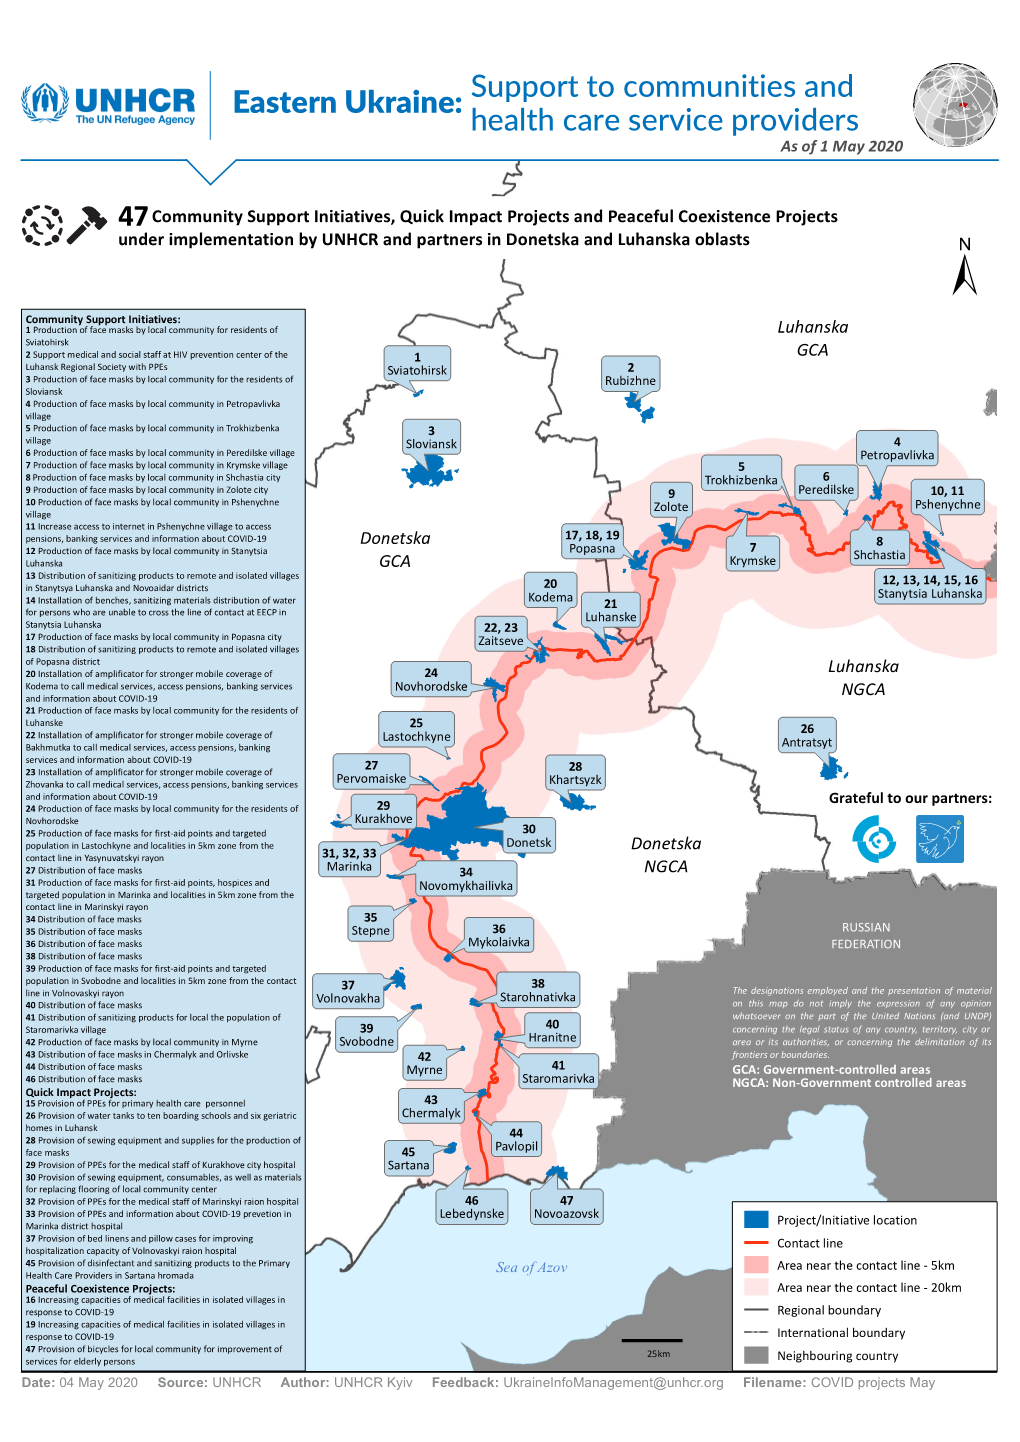 UNHCR Ukraine's COVID-19 Response in Eastern Ukraine